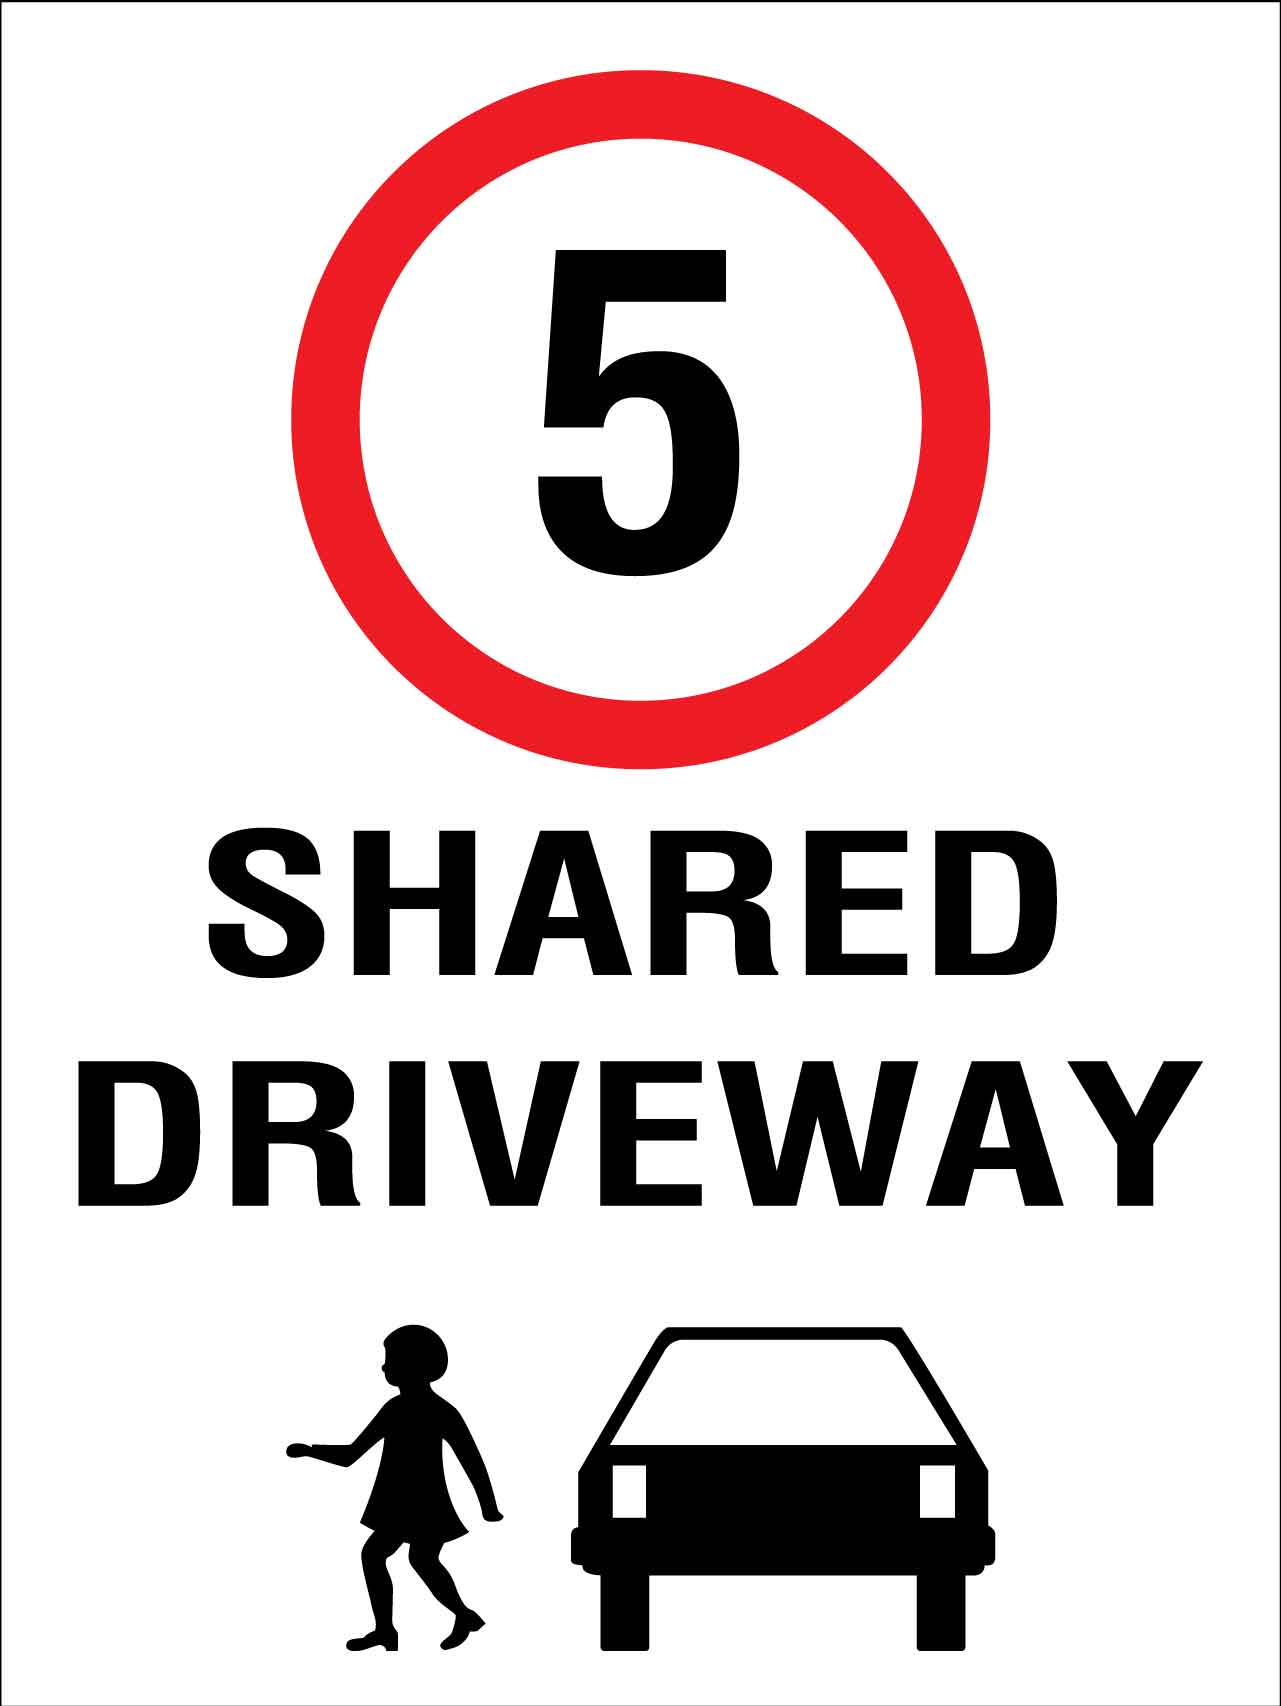 Shared Driveway 5km Speed Limit Sign